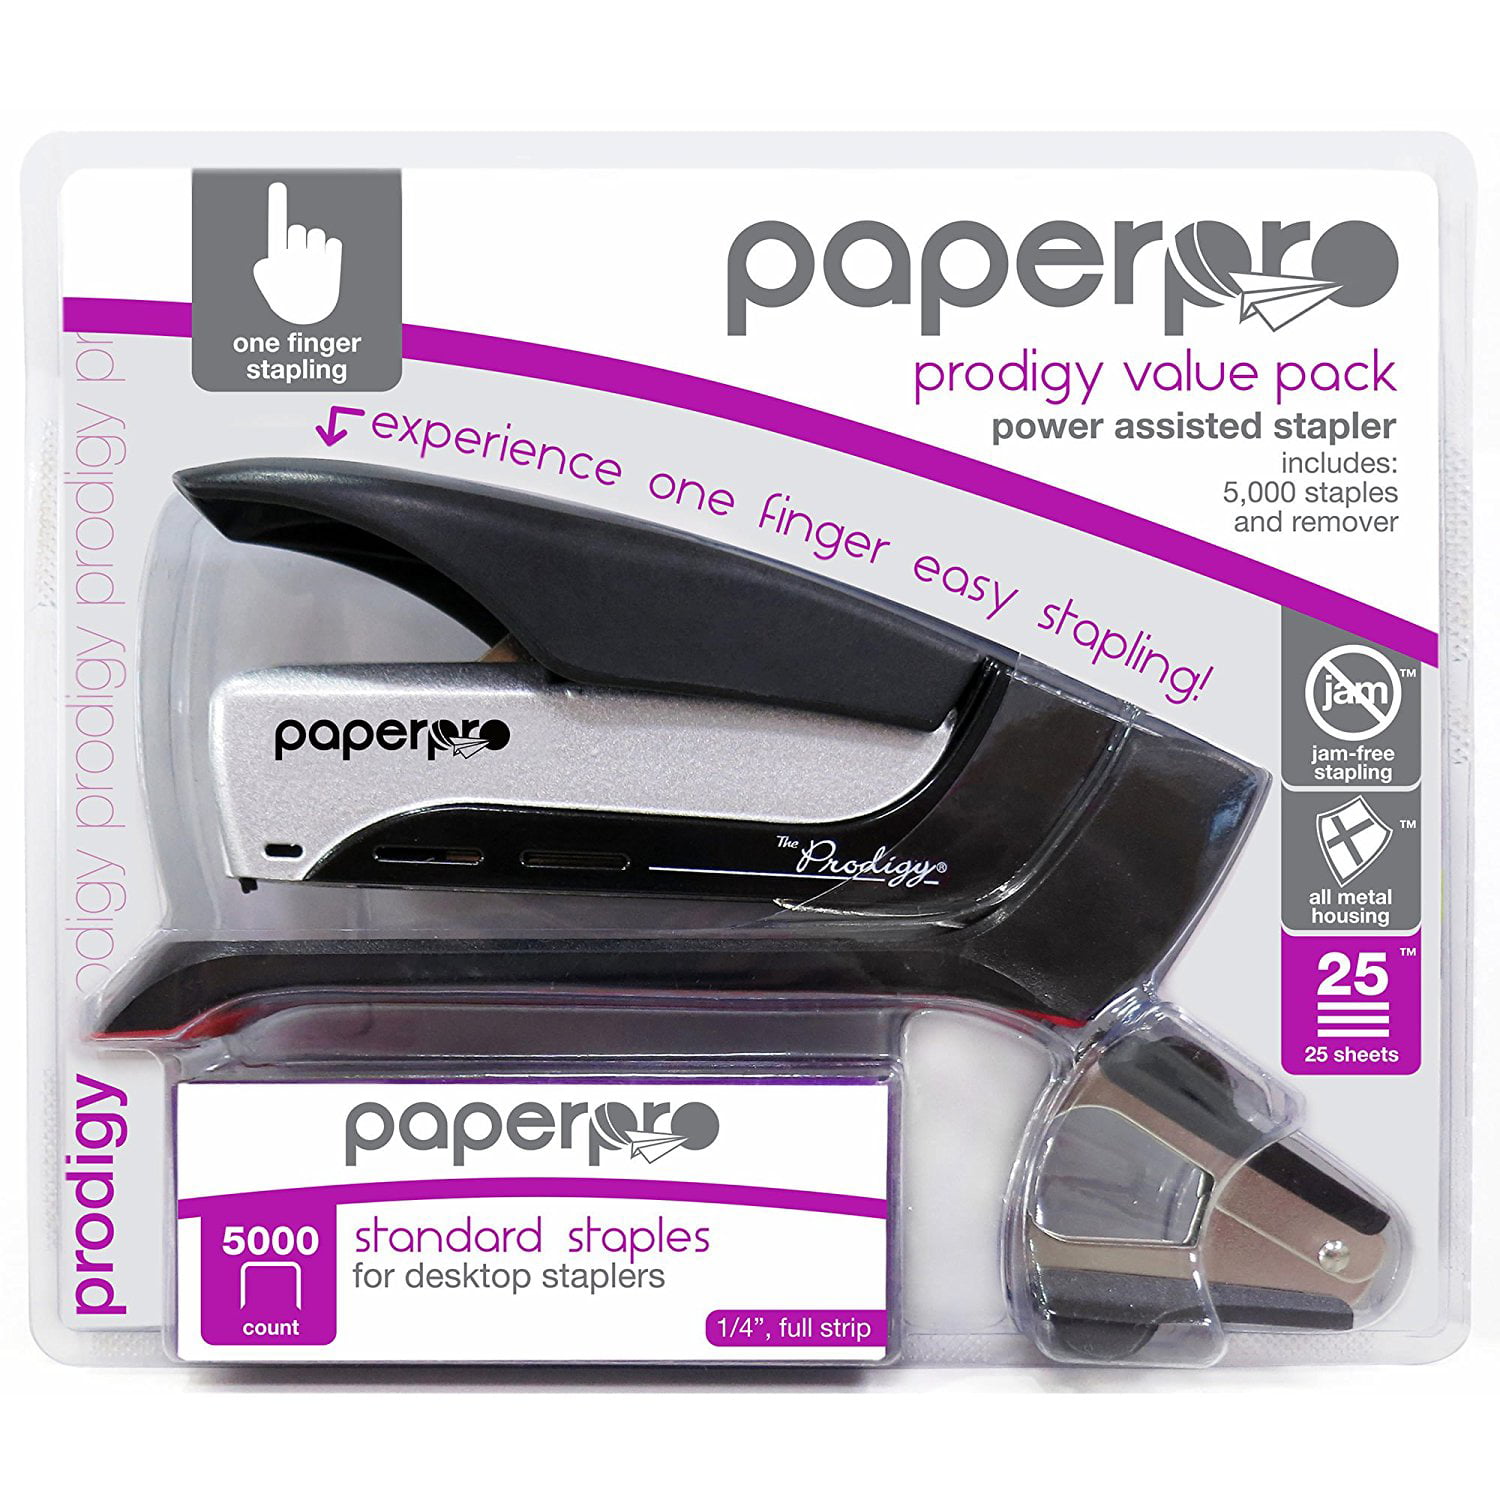 Paperpro 1111 Stapler Prodigy Value Pack Office Products Desktop ...